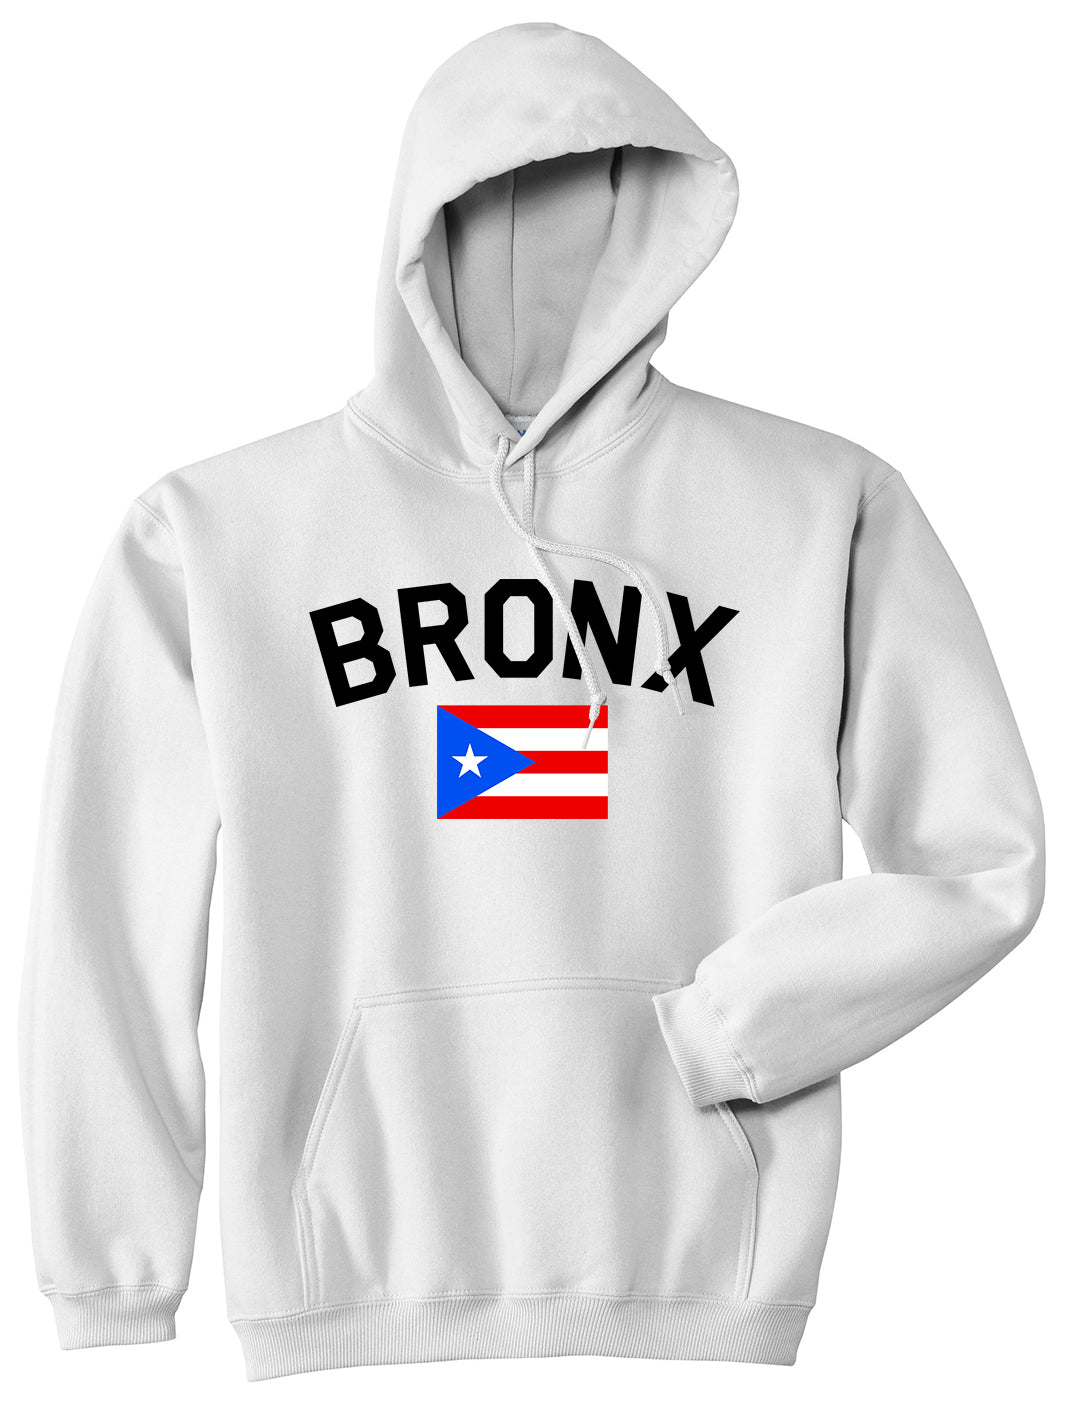 Bronx Puerto Rico Flag Mens Pullover Hoodie White